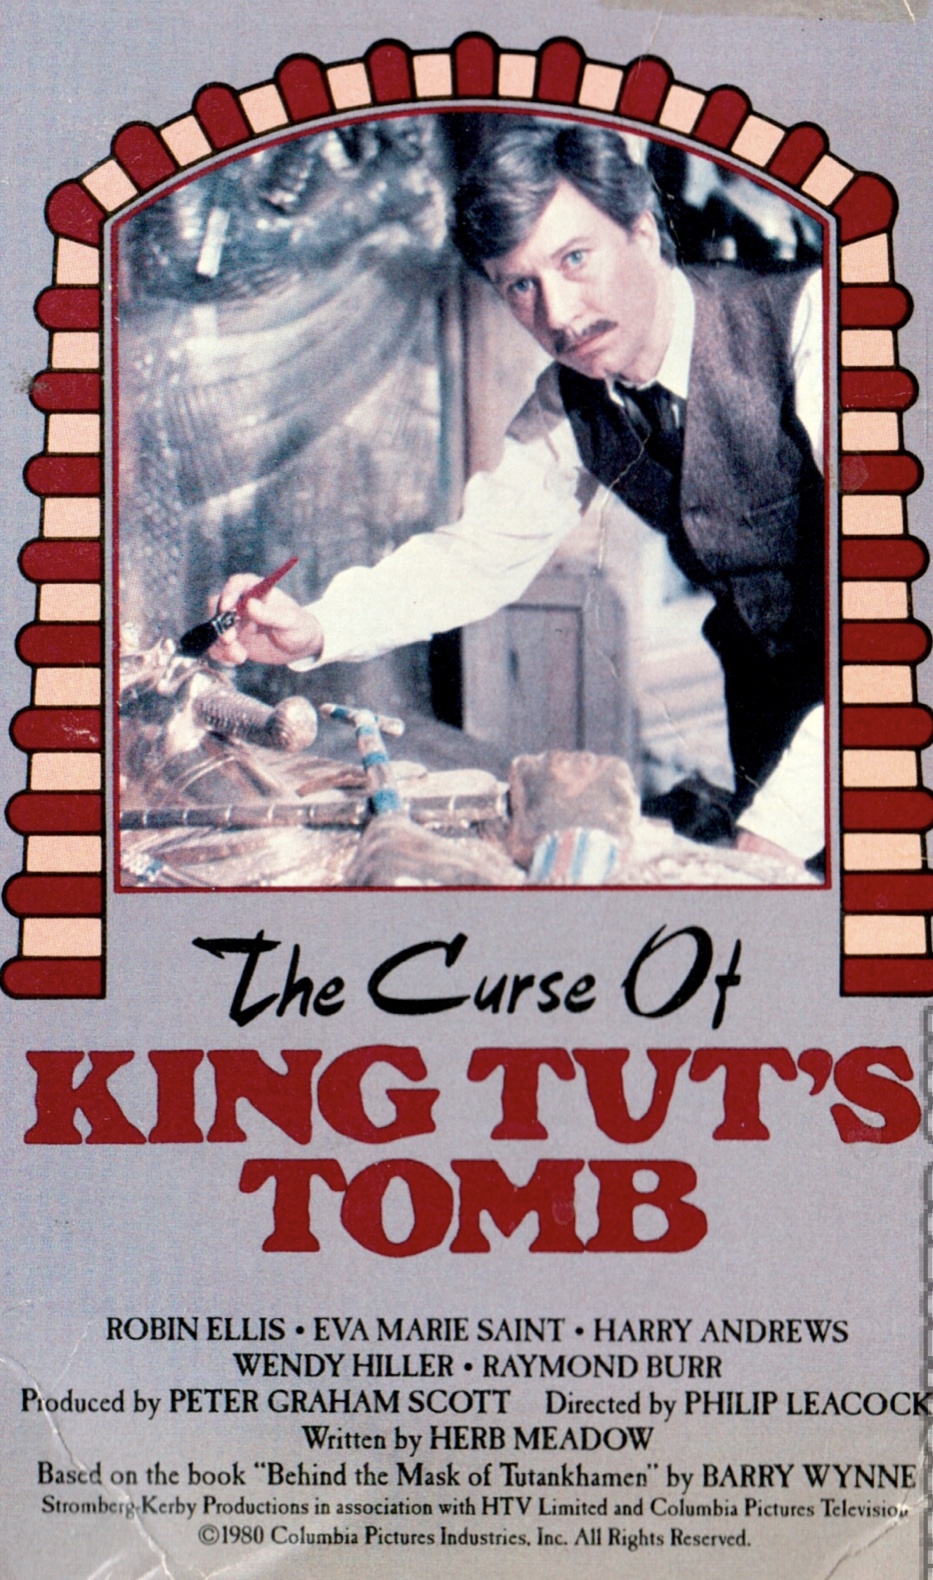 The Curse of King Tut's Tomb (1980) Screenshot 3 